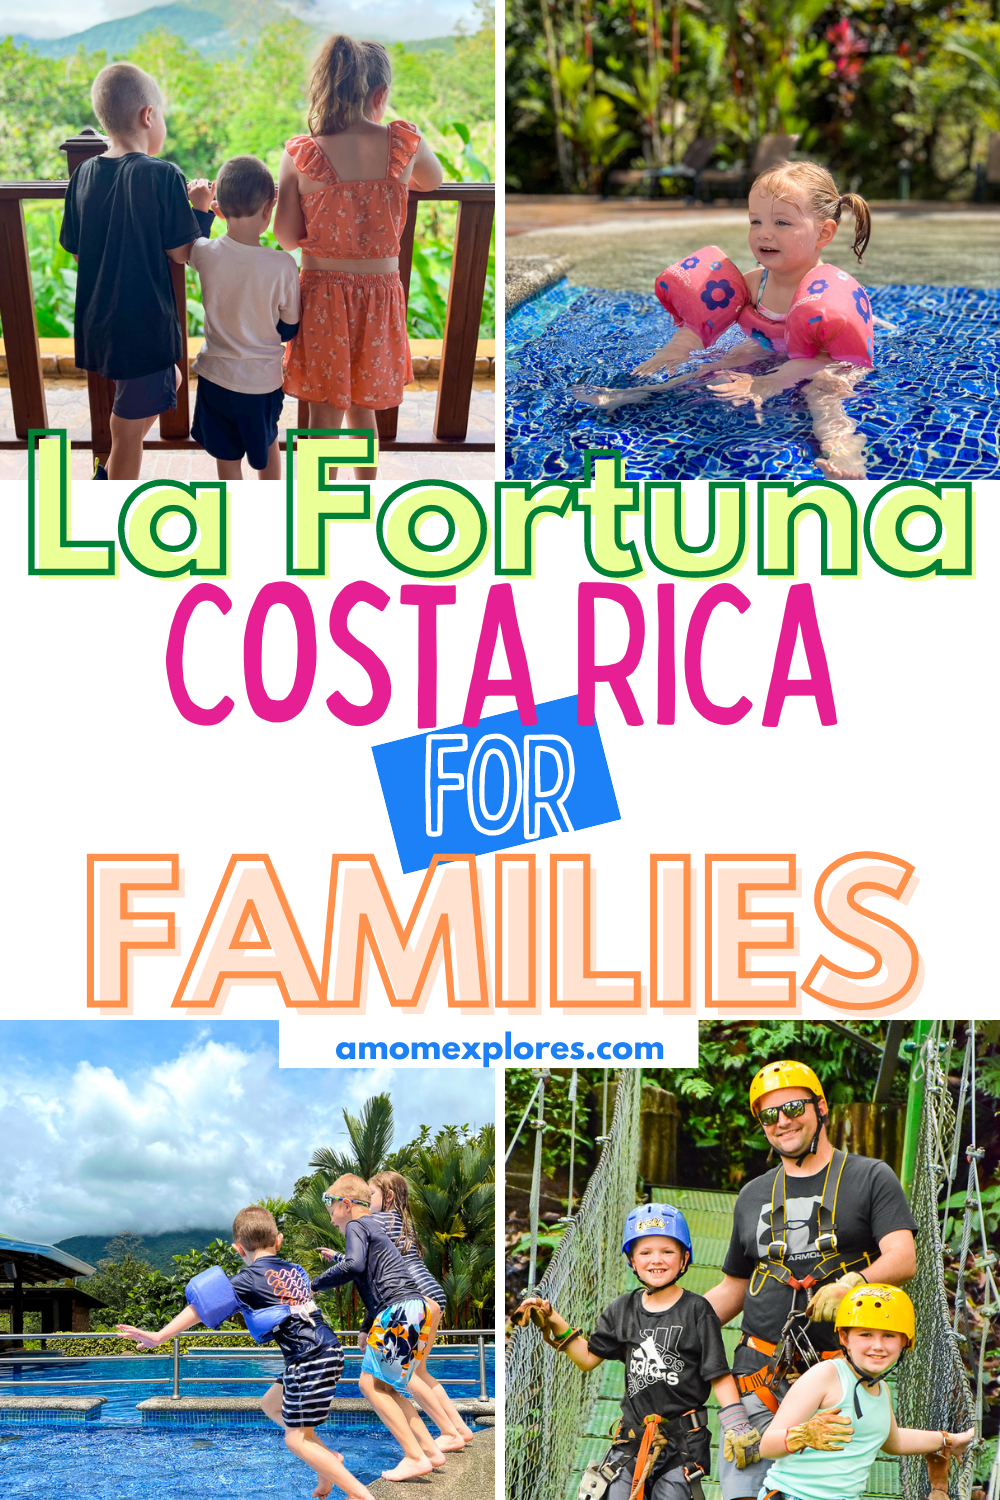 La Fortuna Costa Rica for Families.png